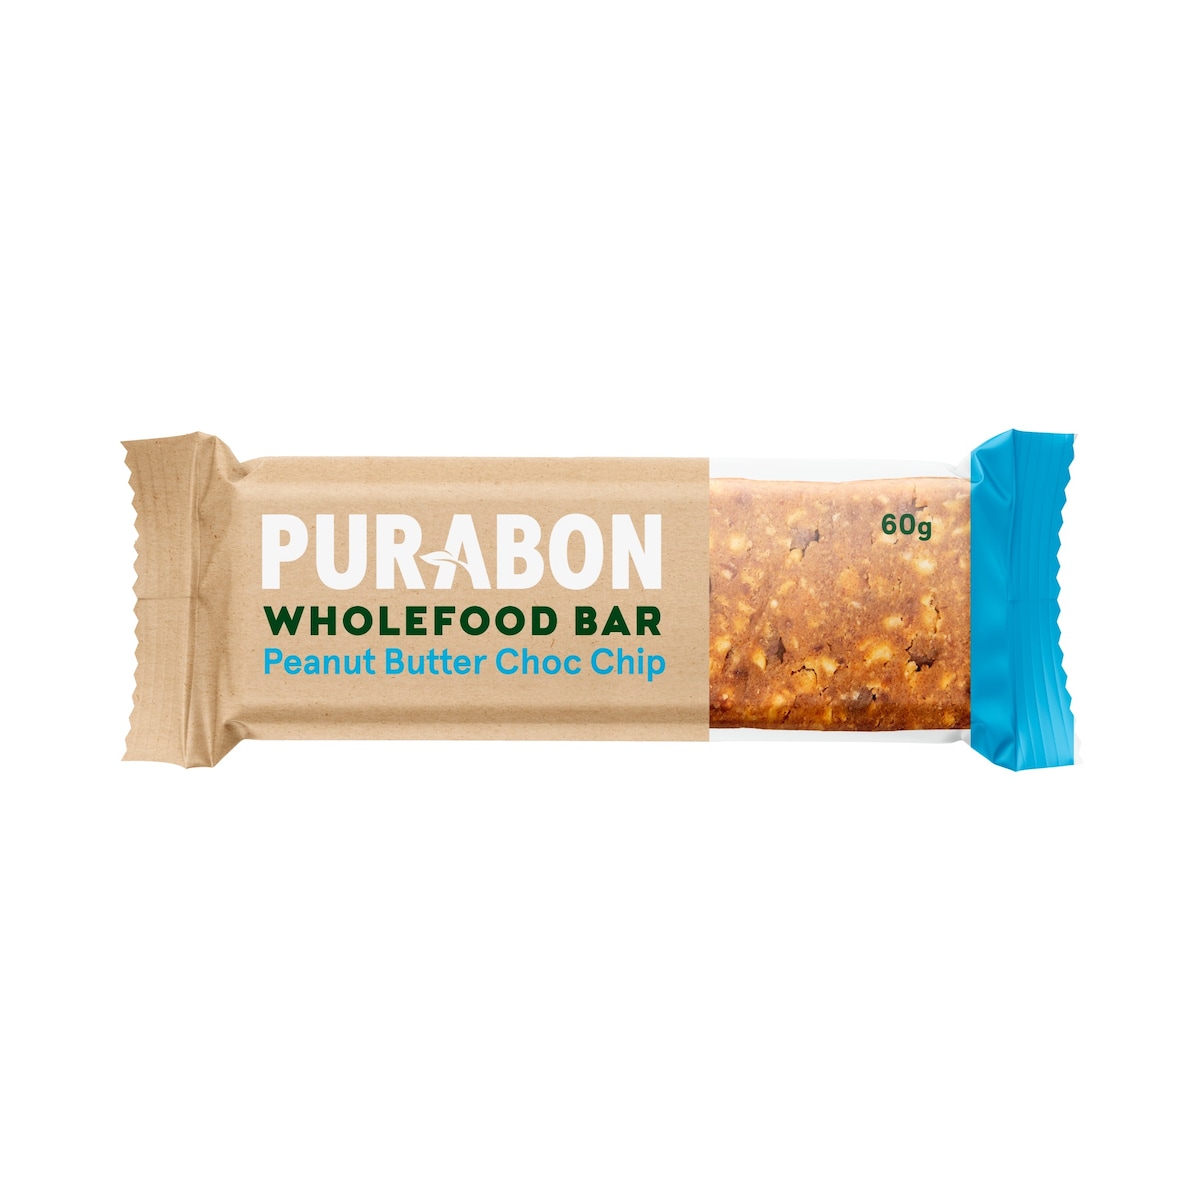 Purabon Wholefood Bar Peanut Butter Choc Chip 60g